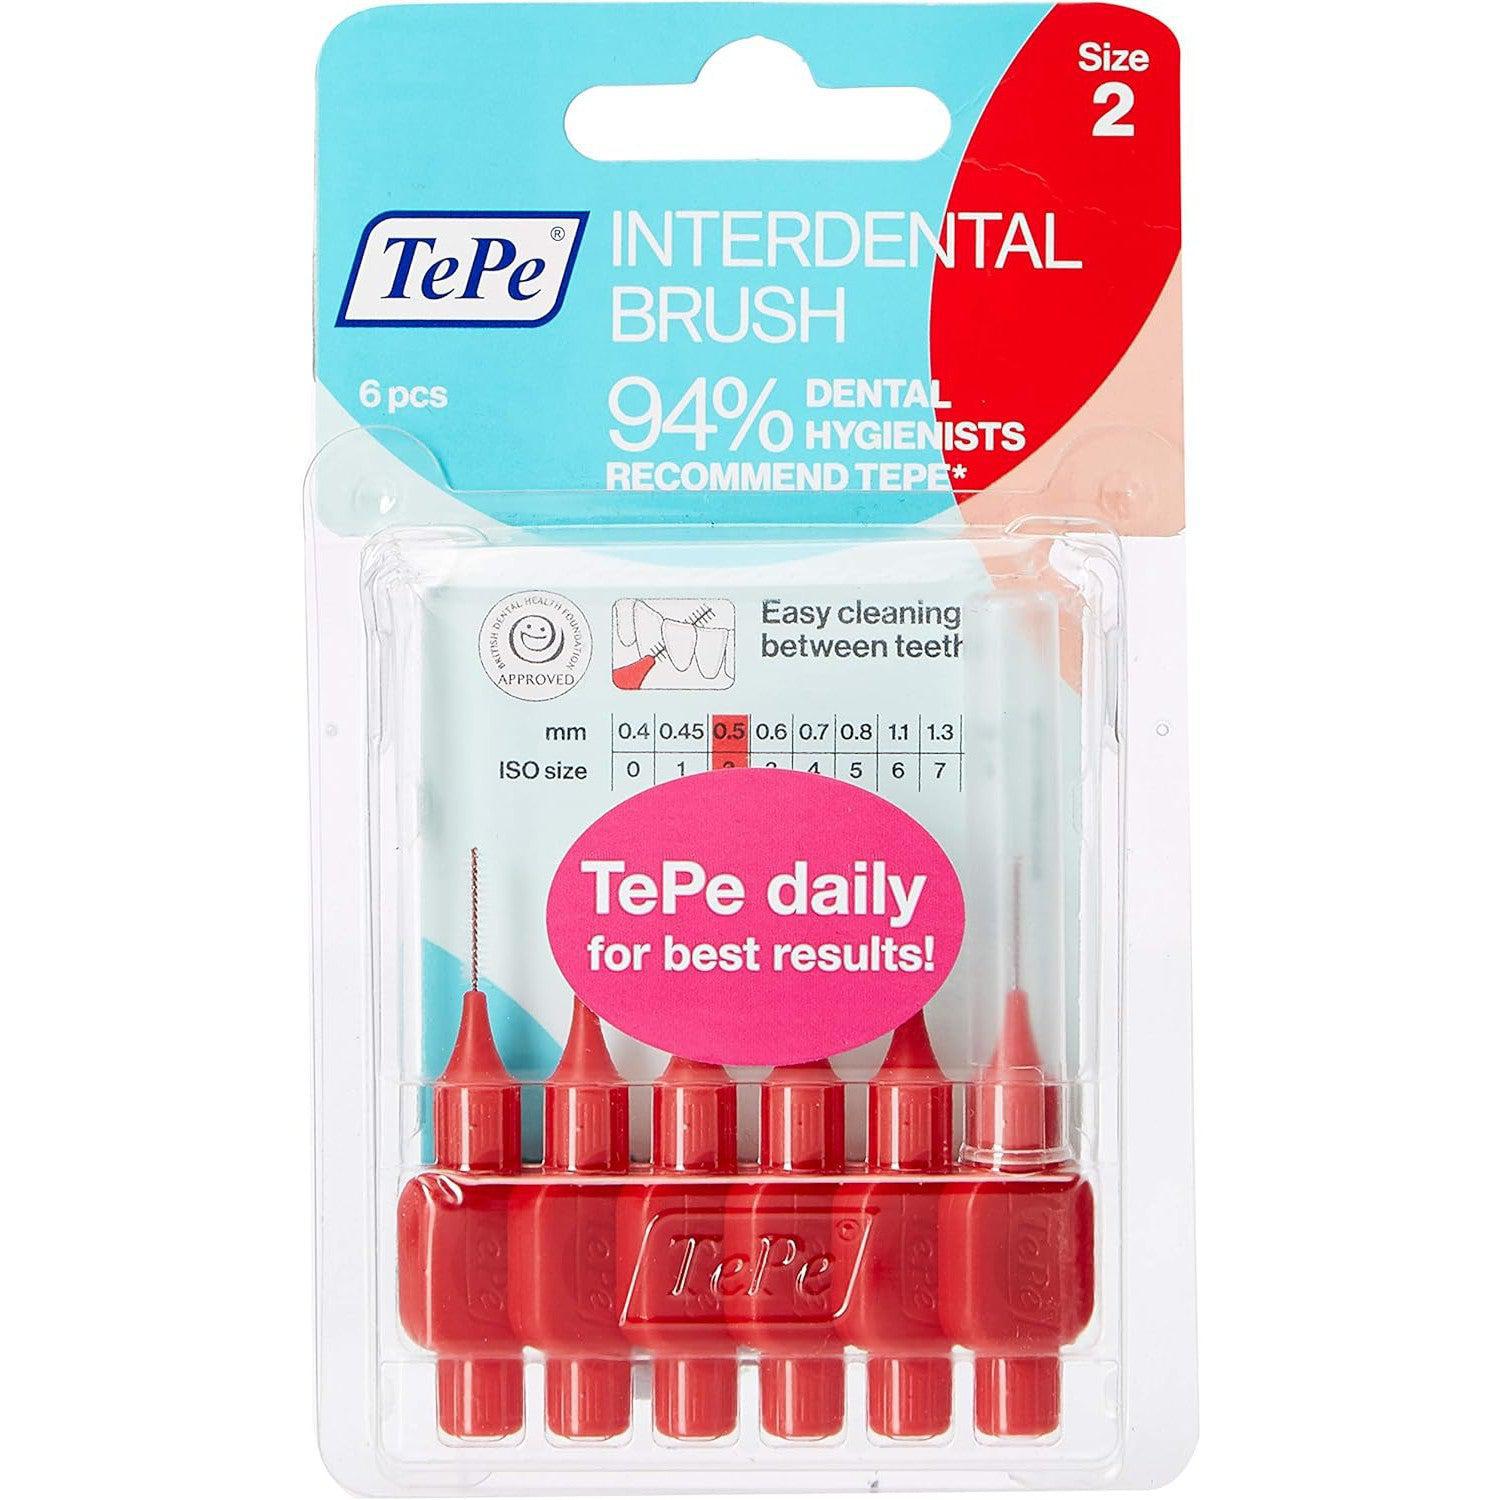 TEPE 0.5mm Interdental Red Brushes Pack of 6